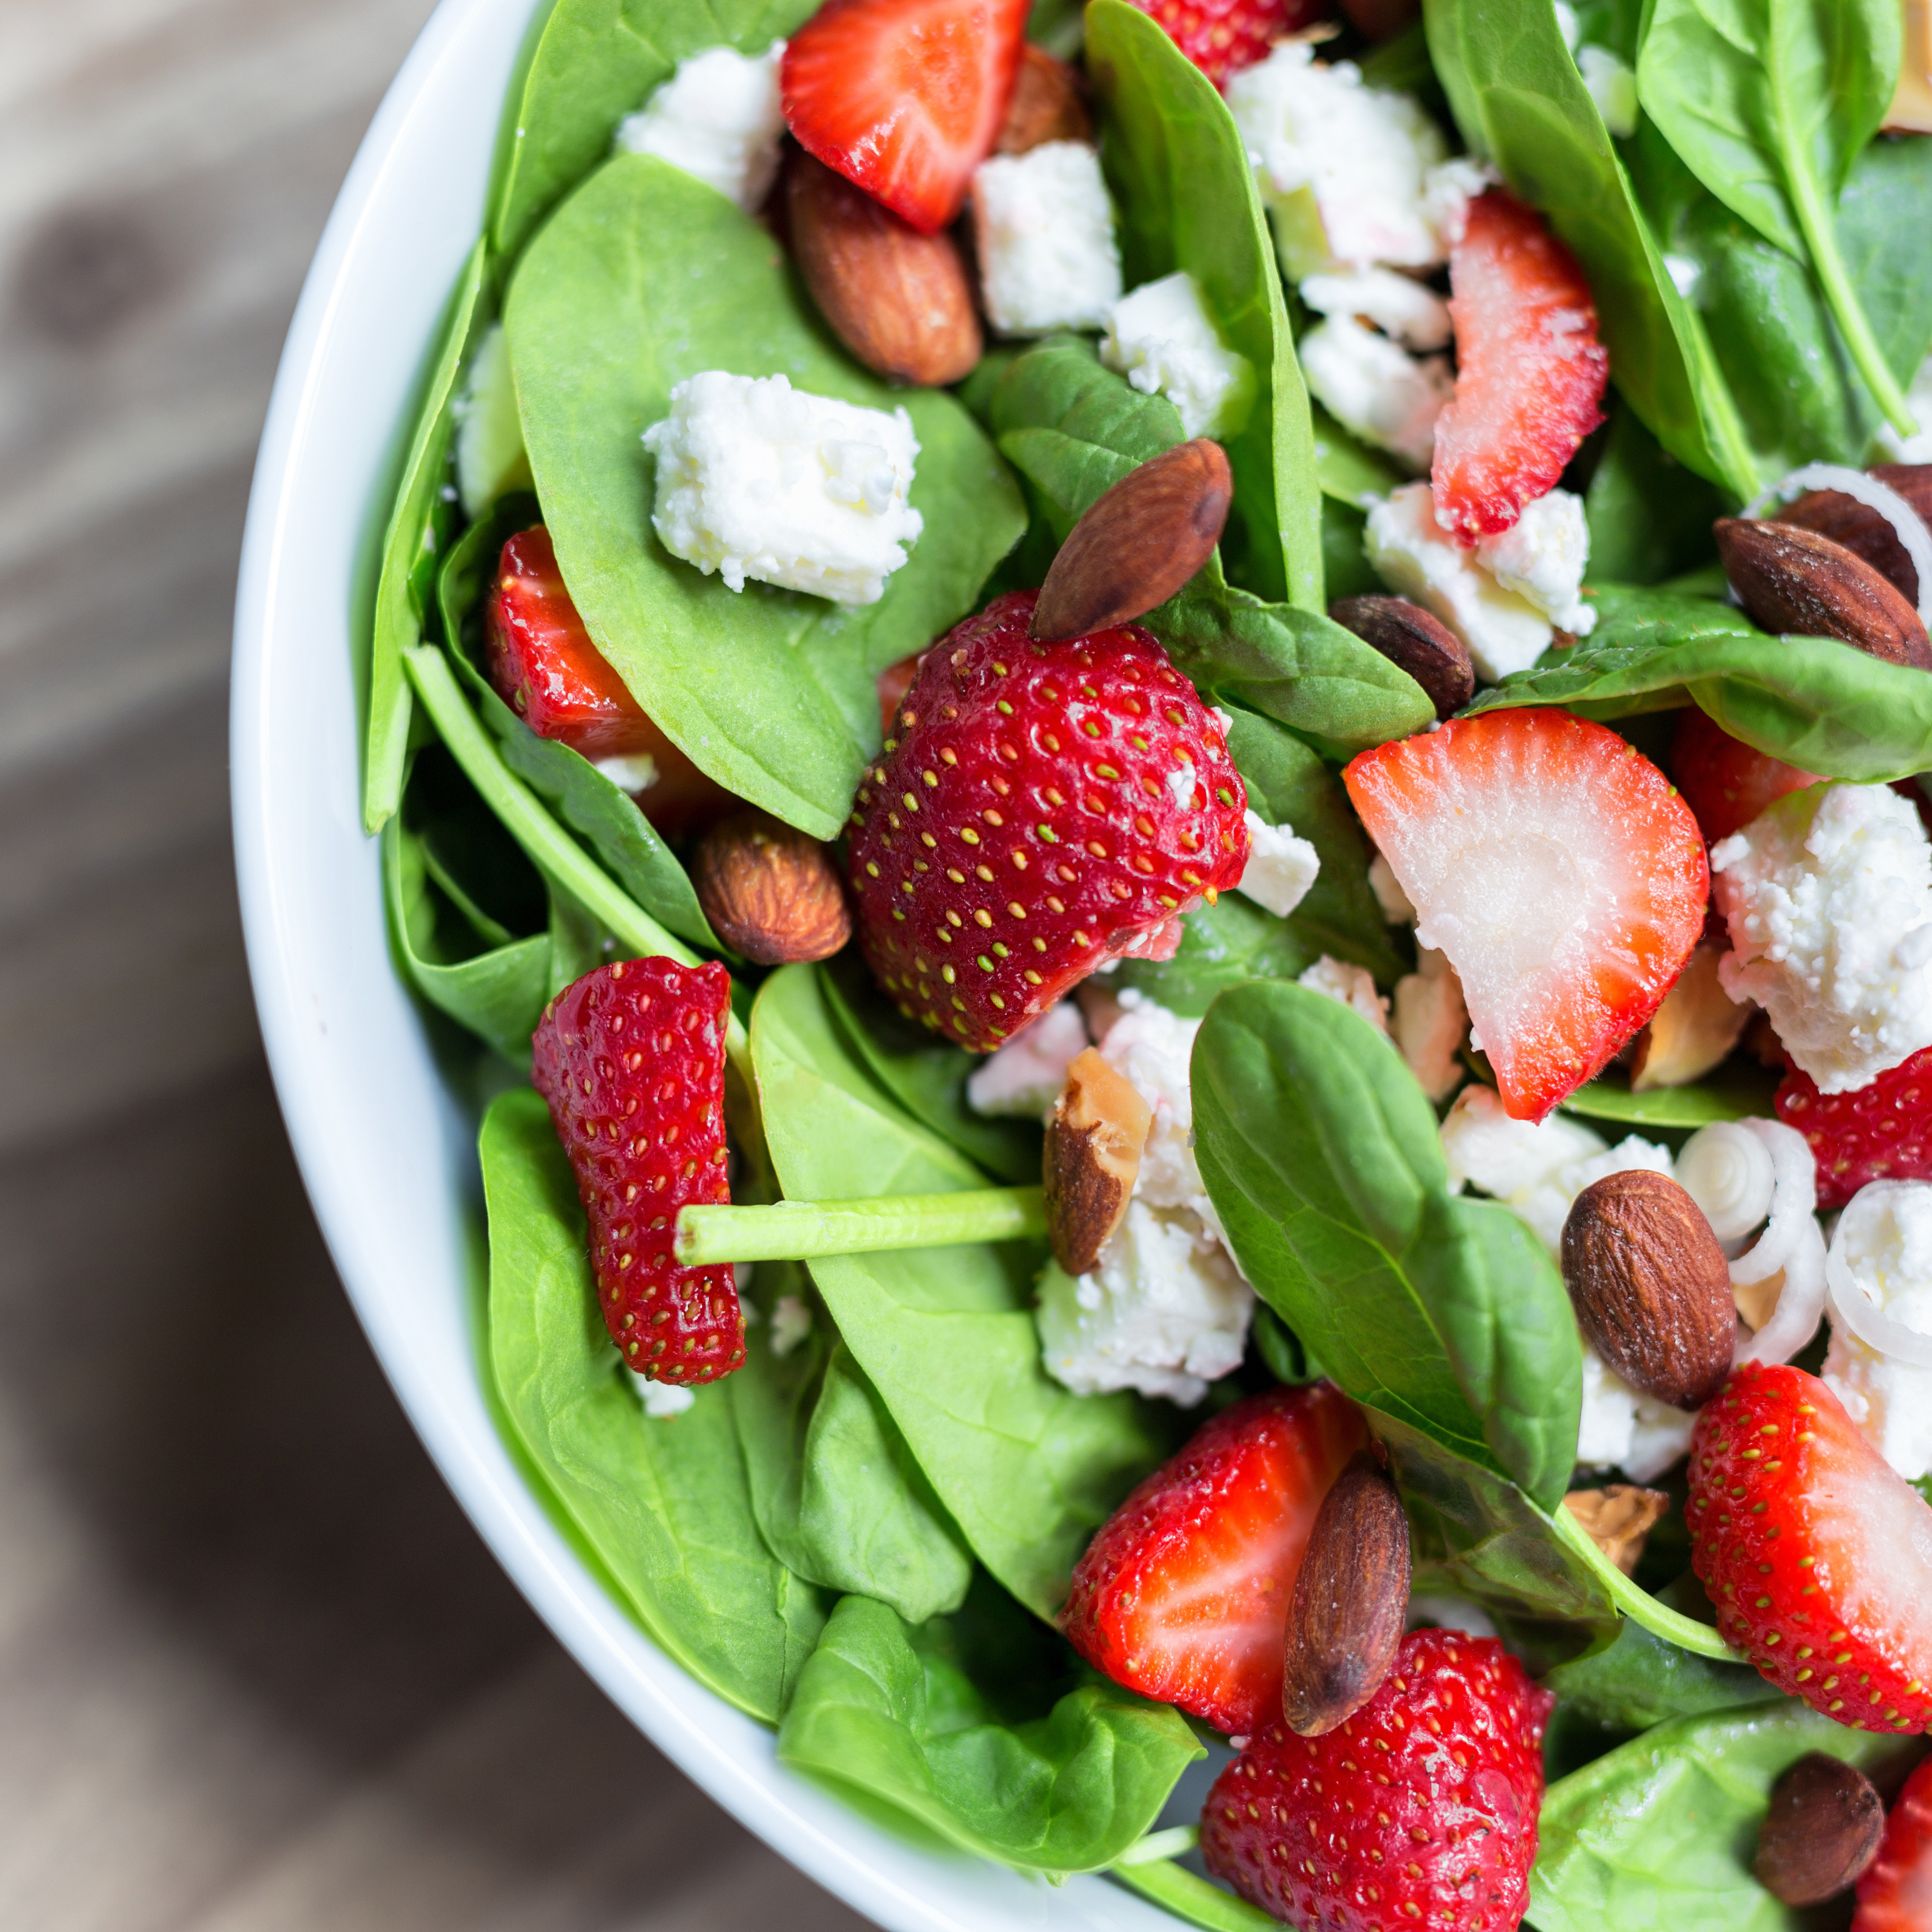 Heart Healthy Salad Dressing Recipes
 3 Heart Healthy Salad Dressing Recipes